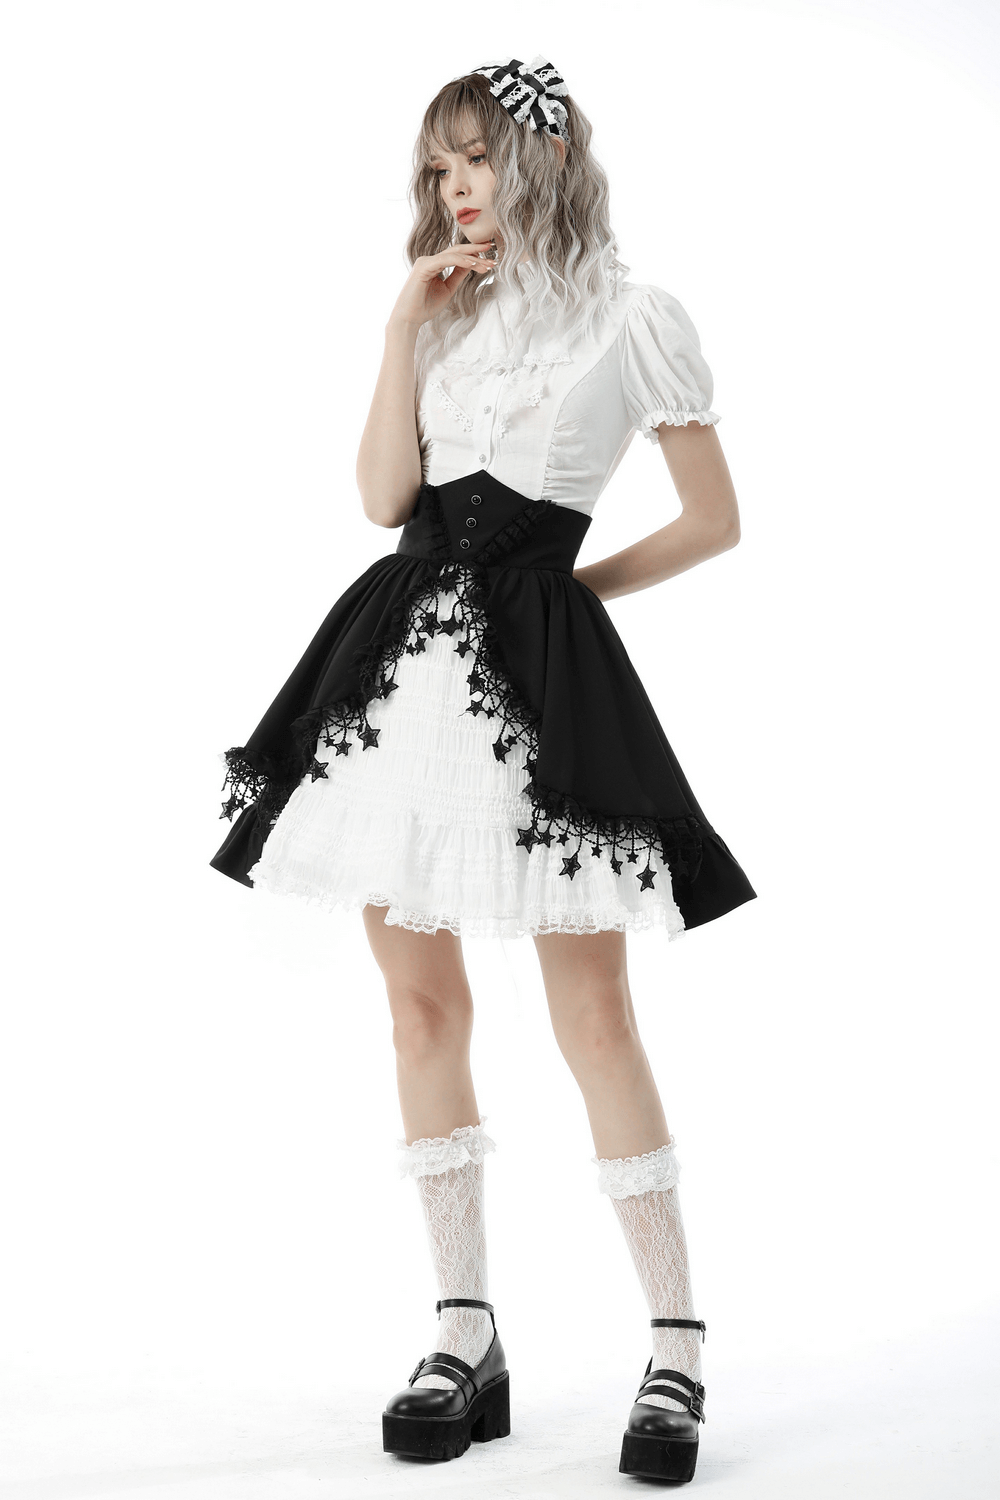 Elegant Lace-Trimmed Black and White High Waist Skirt